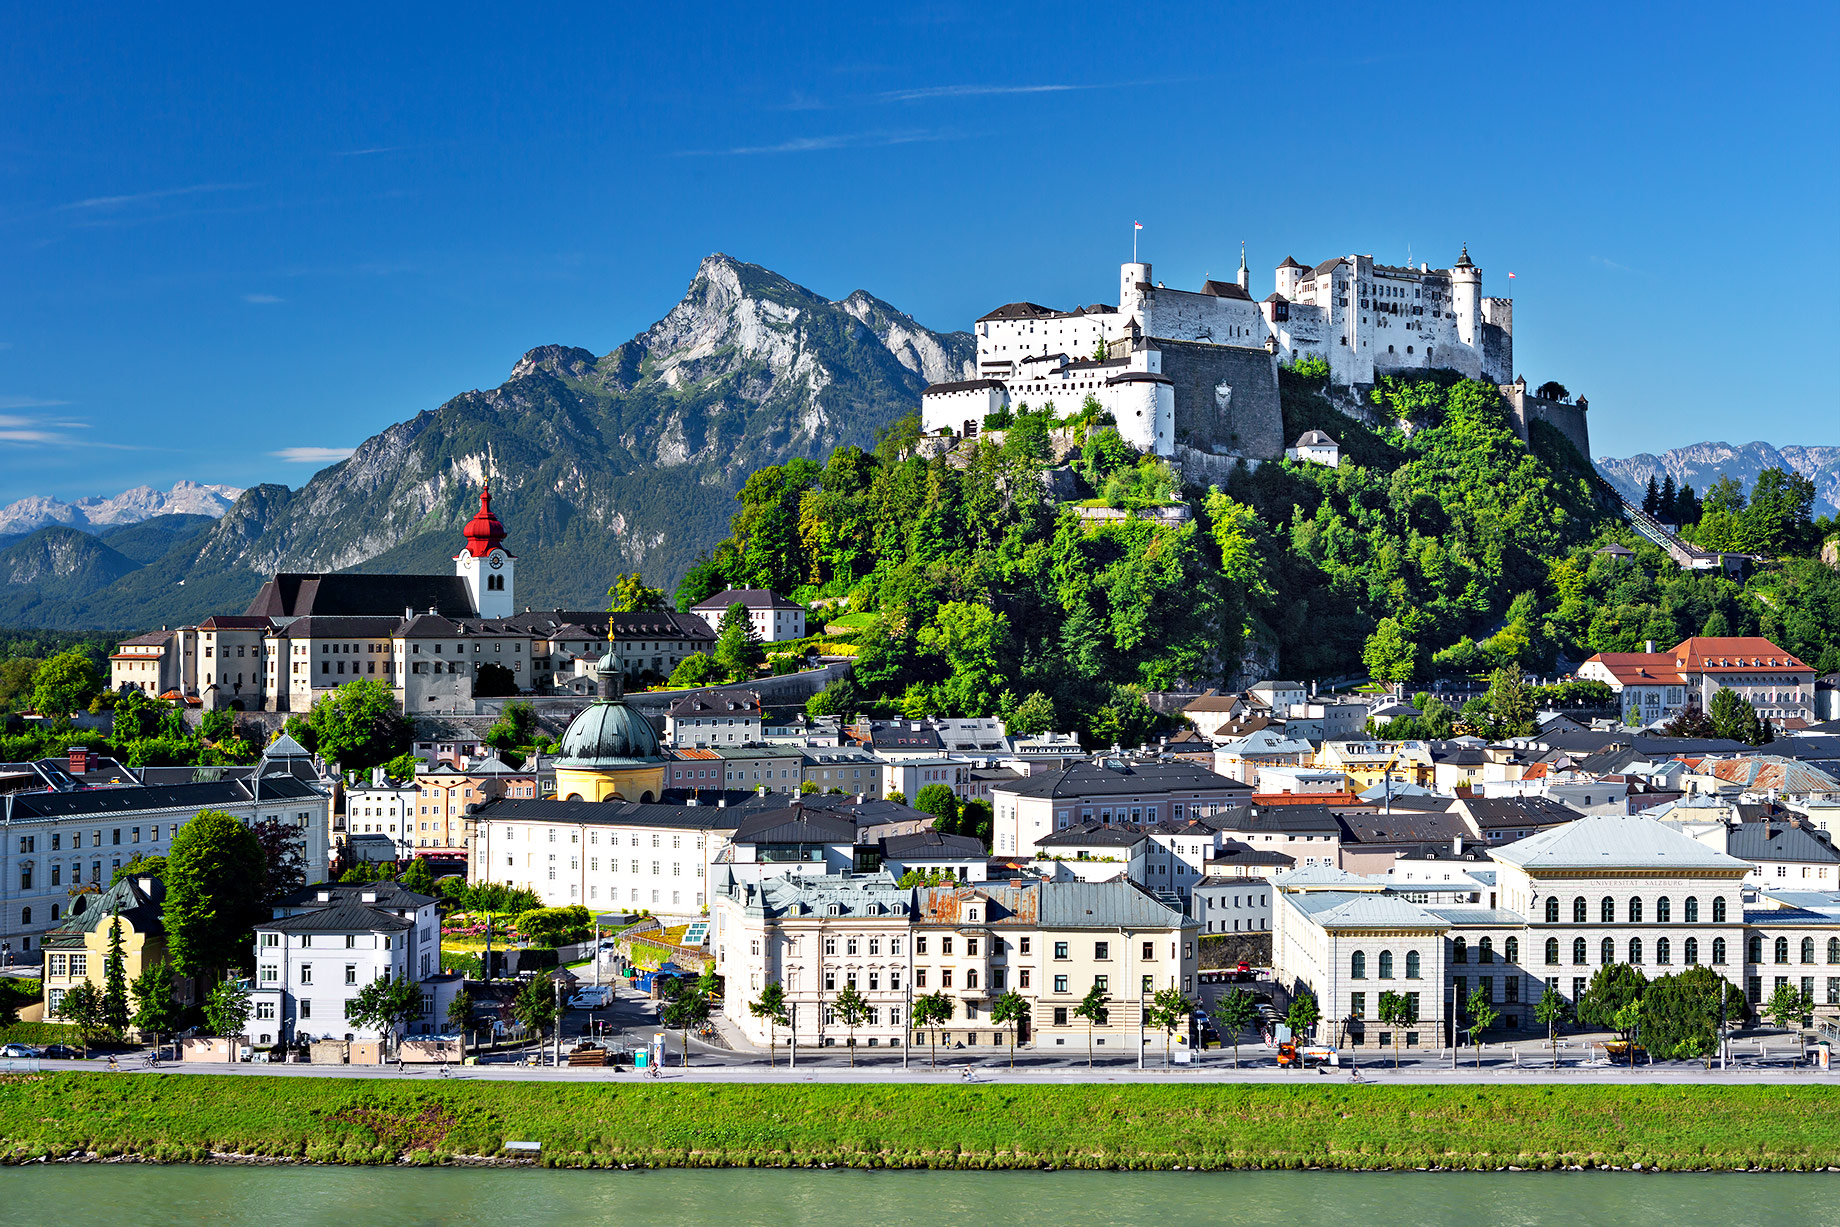 Hohensalzburg Castle - Salzburg, Austria